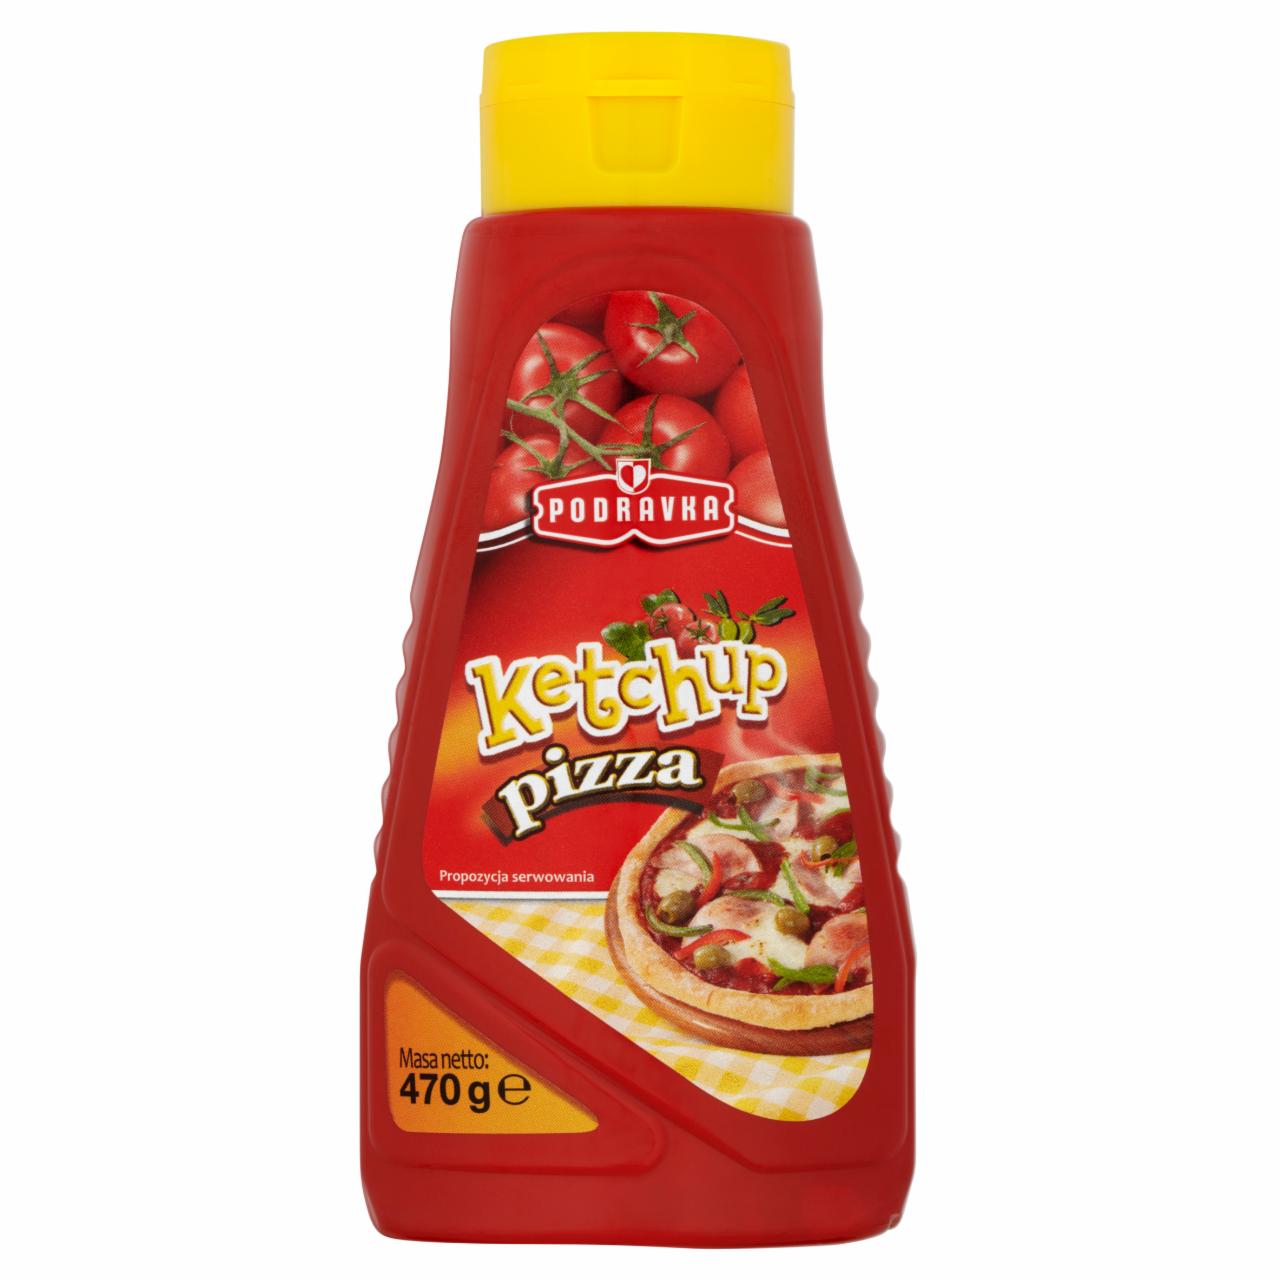 Zdjęcia - Podravka Ketchup pizza 470 g